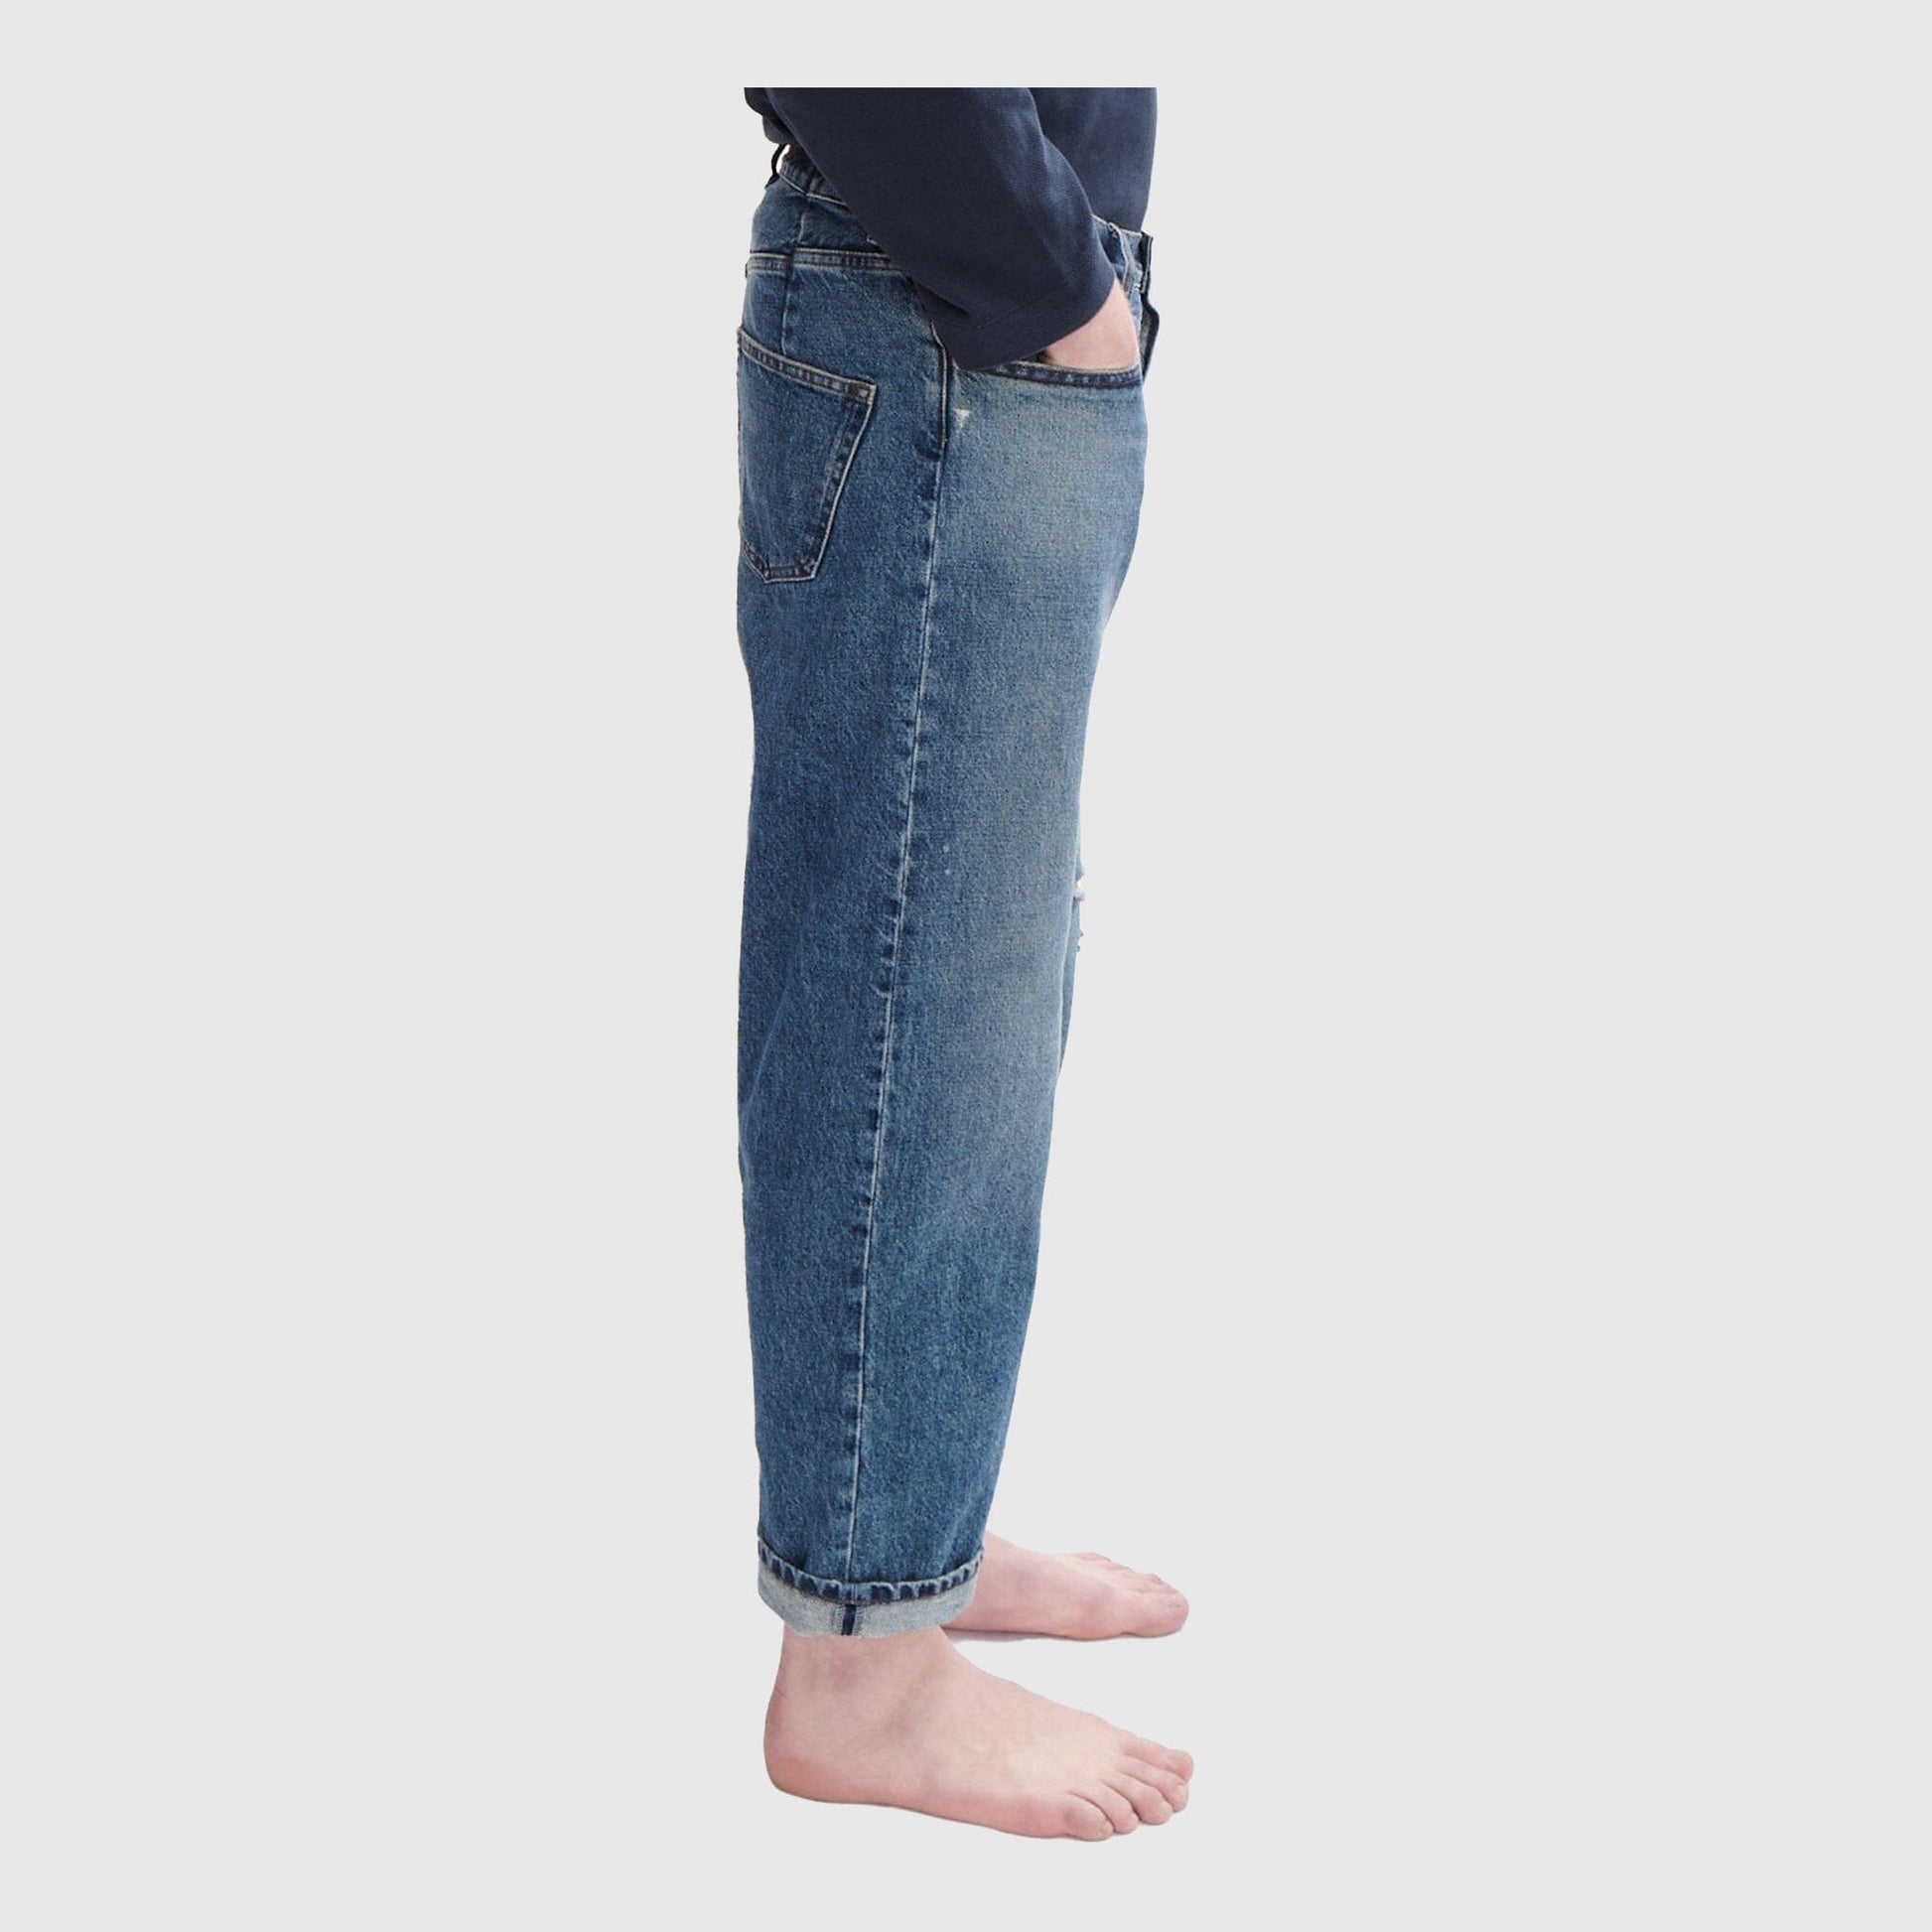 A.P.C. x JW Anderson Ulysses Jeans - Washed Indigo Pants A.P.C. x JW Anderson 